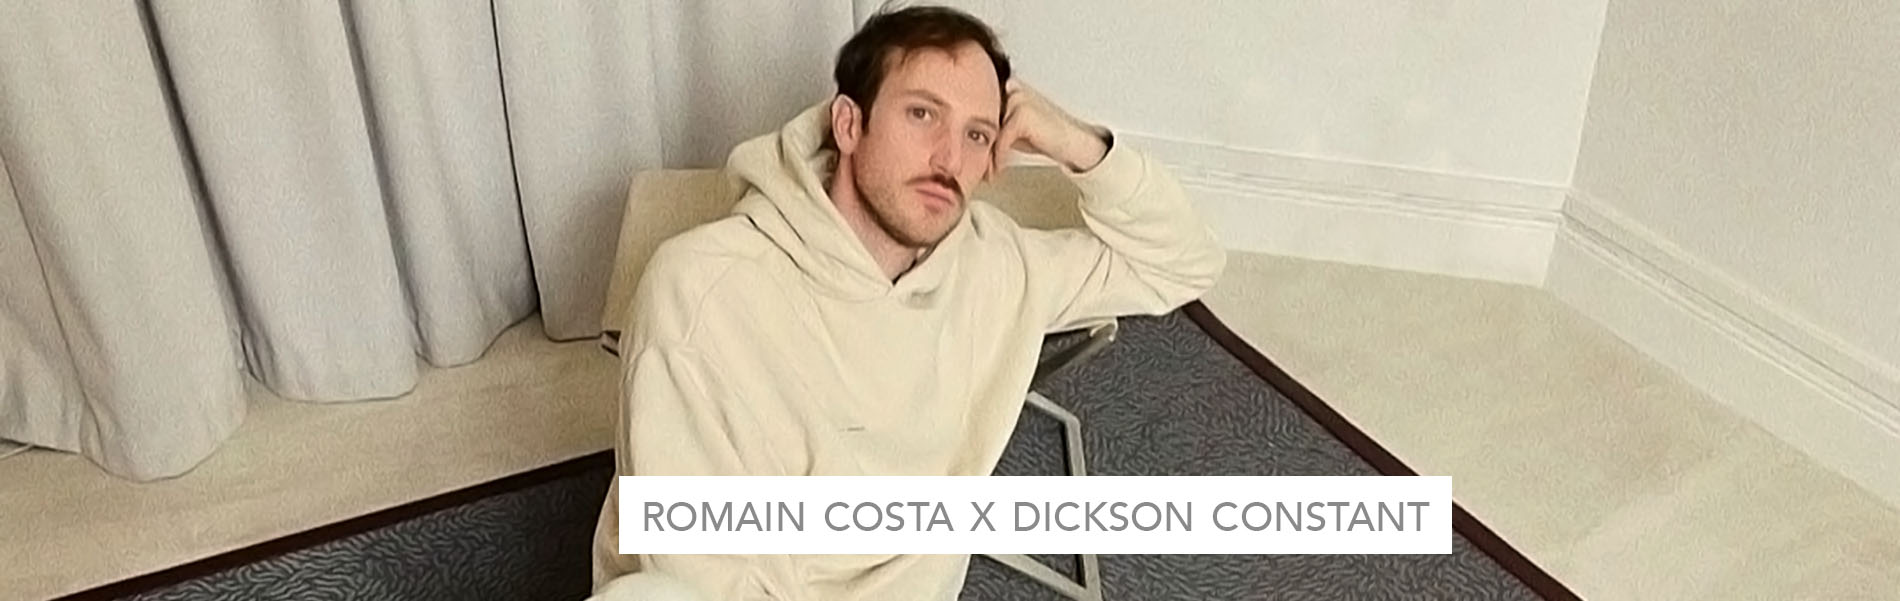 Romain Costa met en valeur son tapis Dickson sur Instagram